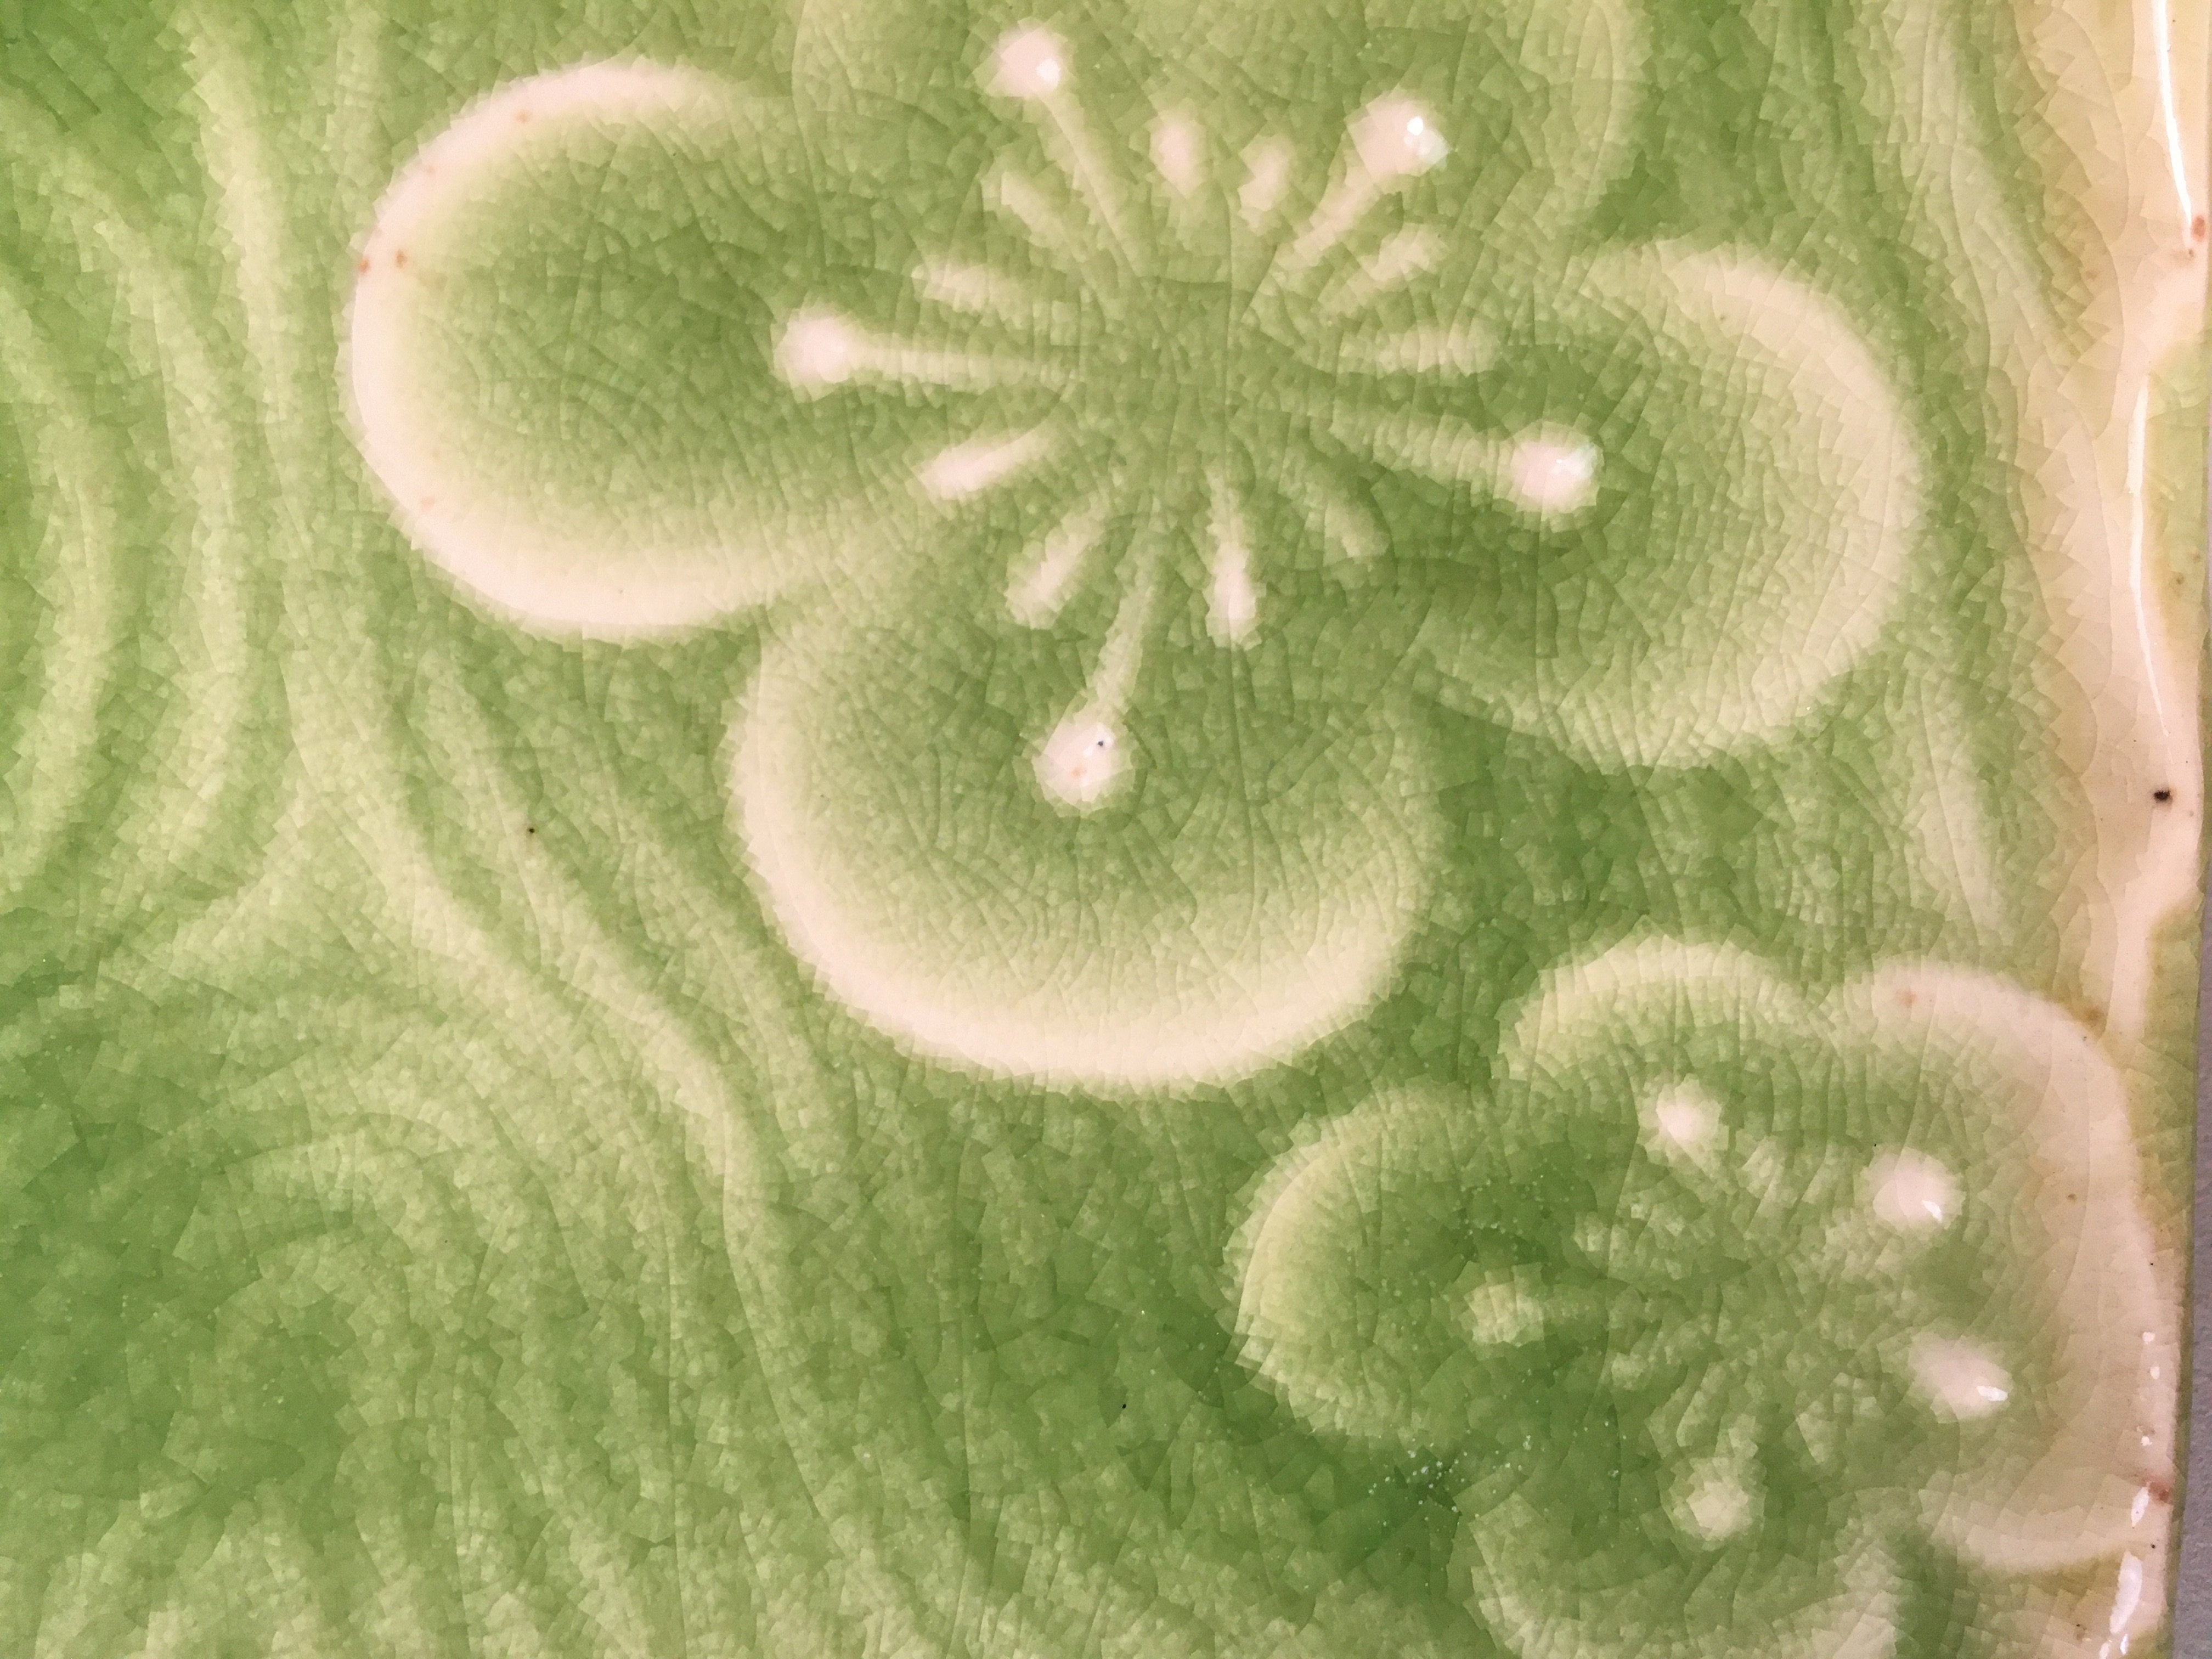 Japanese Ceramic Small Plate Kozara Vtg Square Green Plum Blossom Pottery PP438